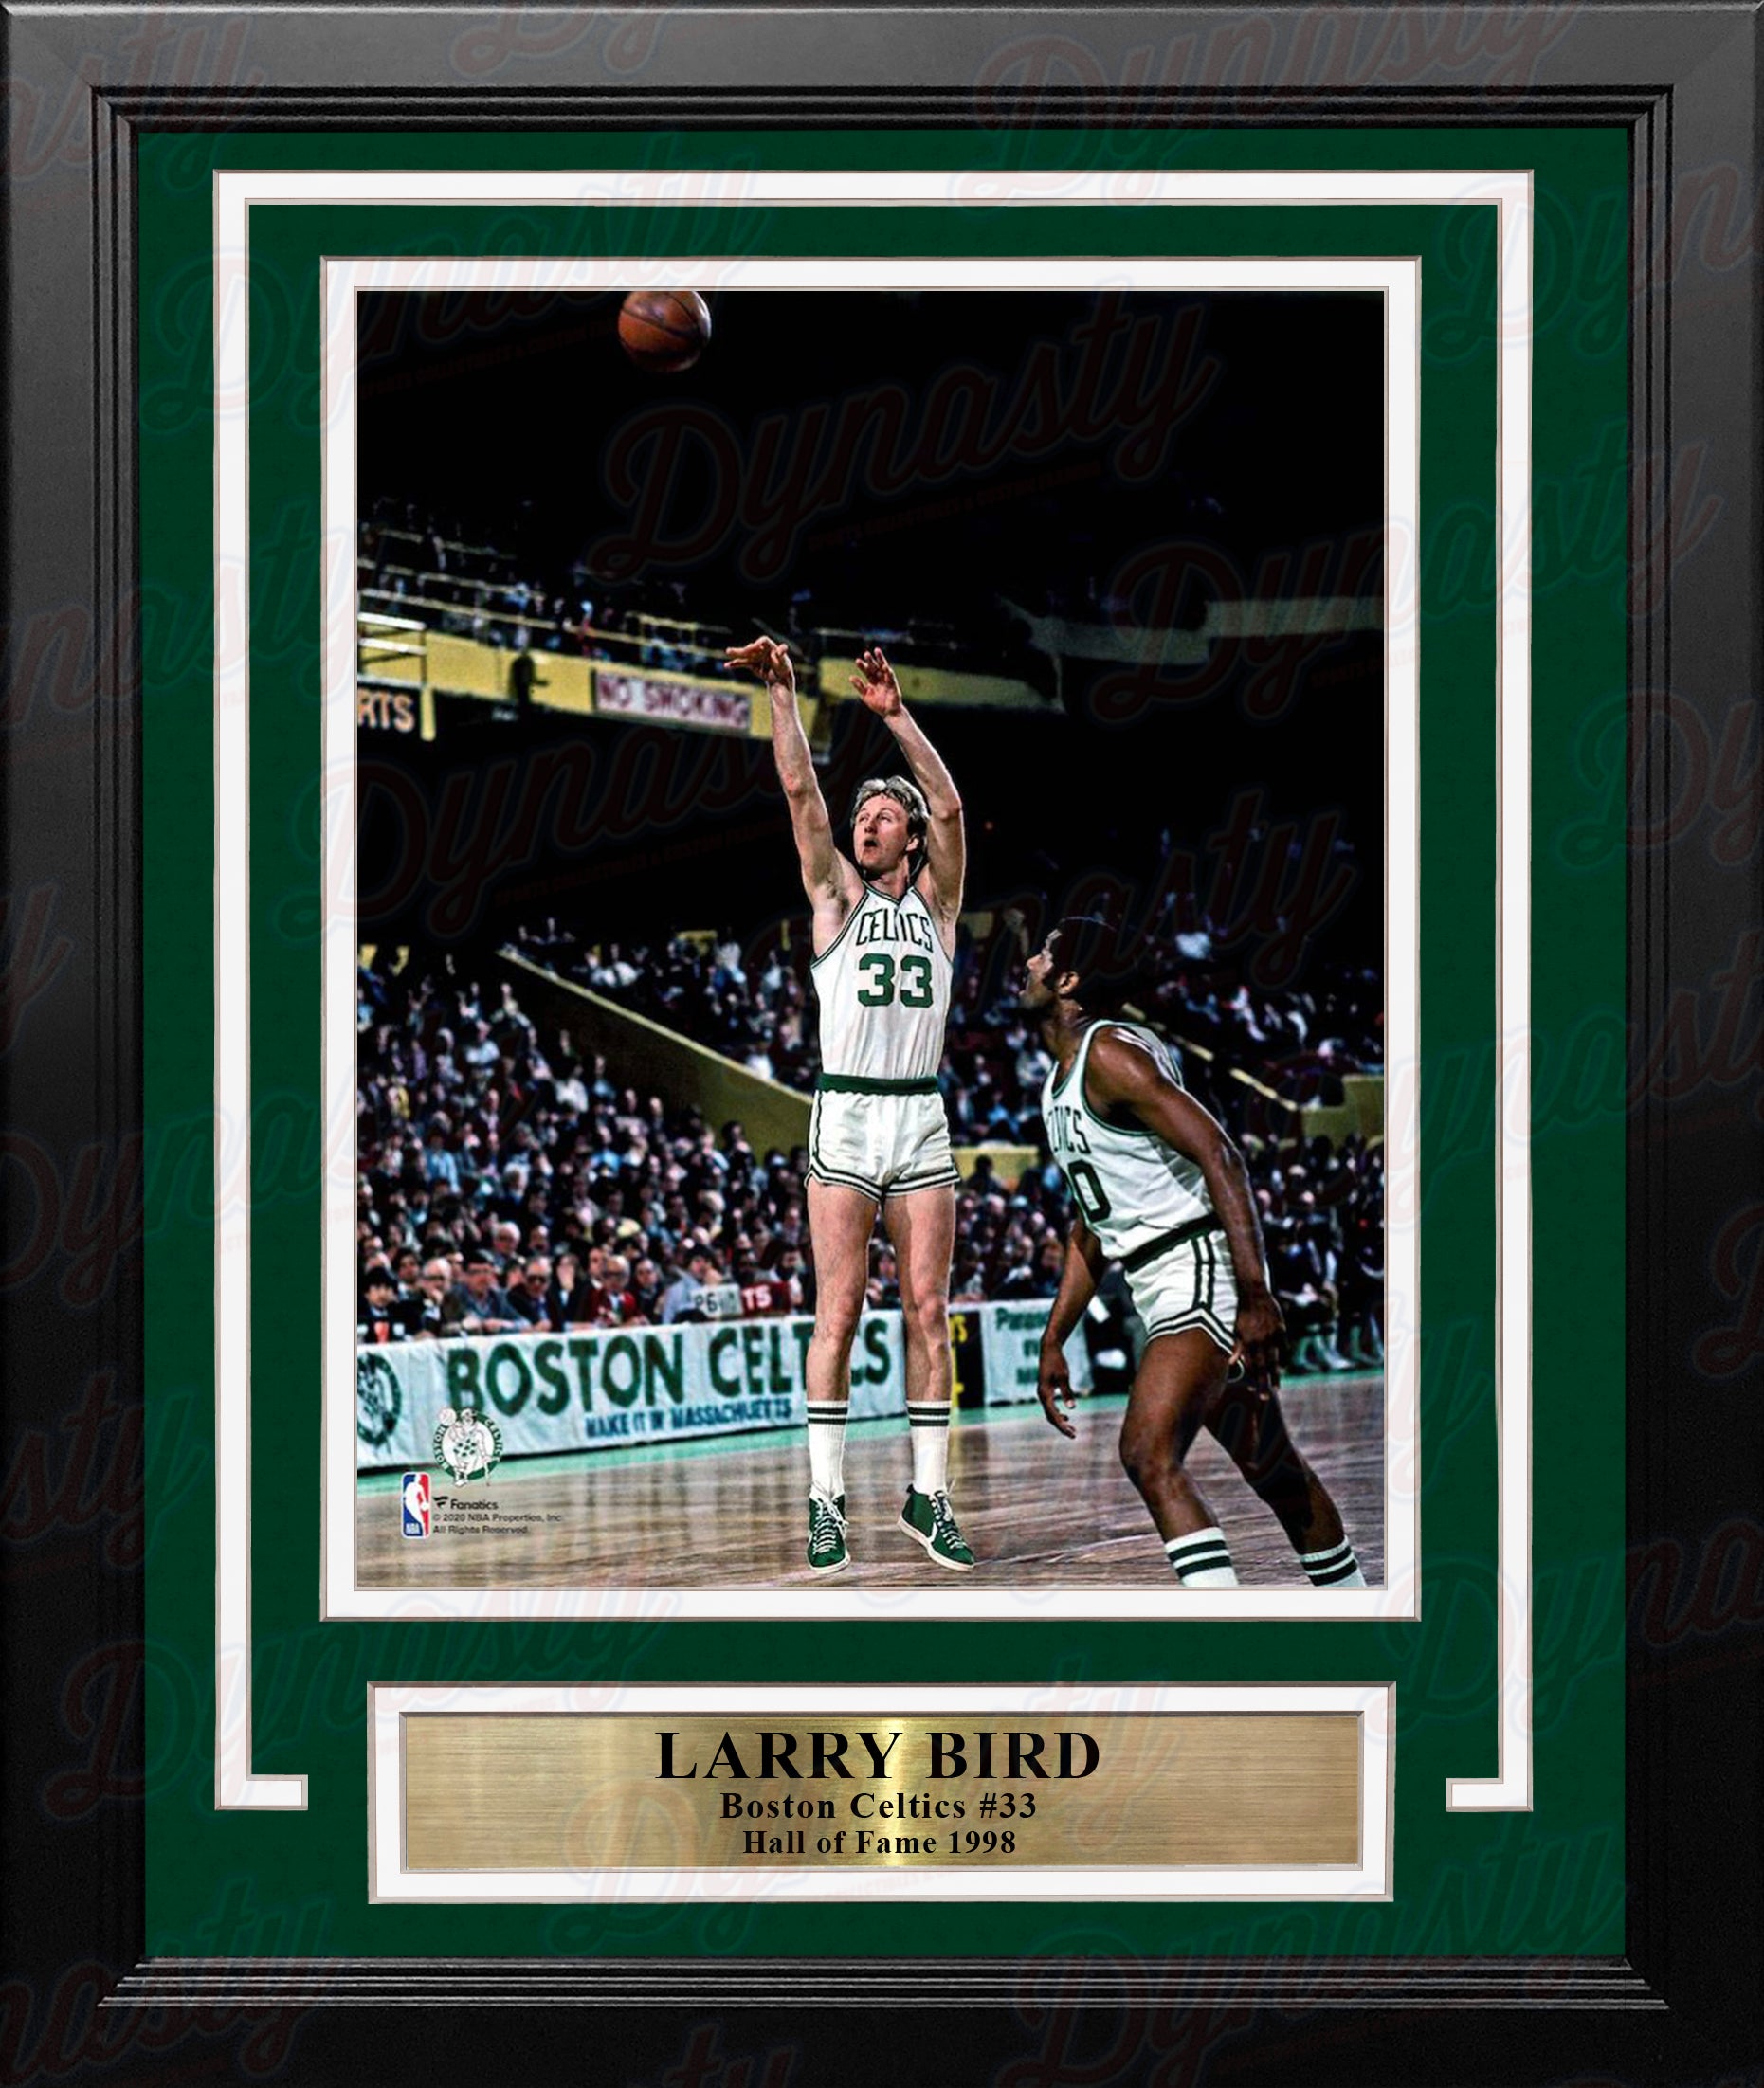 Larry Bird in Action Boston Celtics 8" x 10" Framed Basketball Photo - Dynasty Sports & Framing 